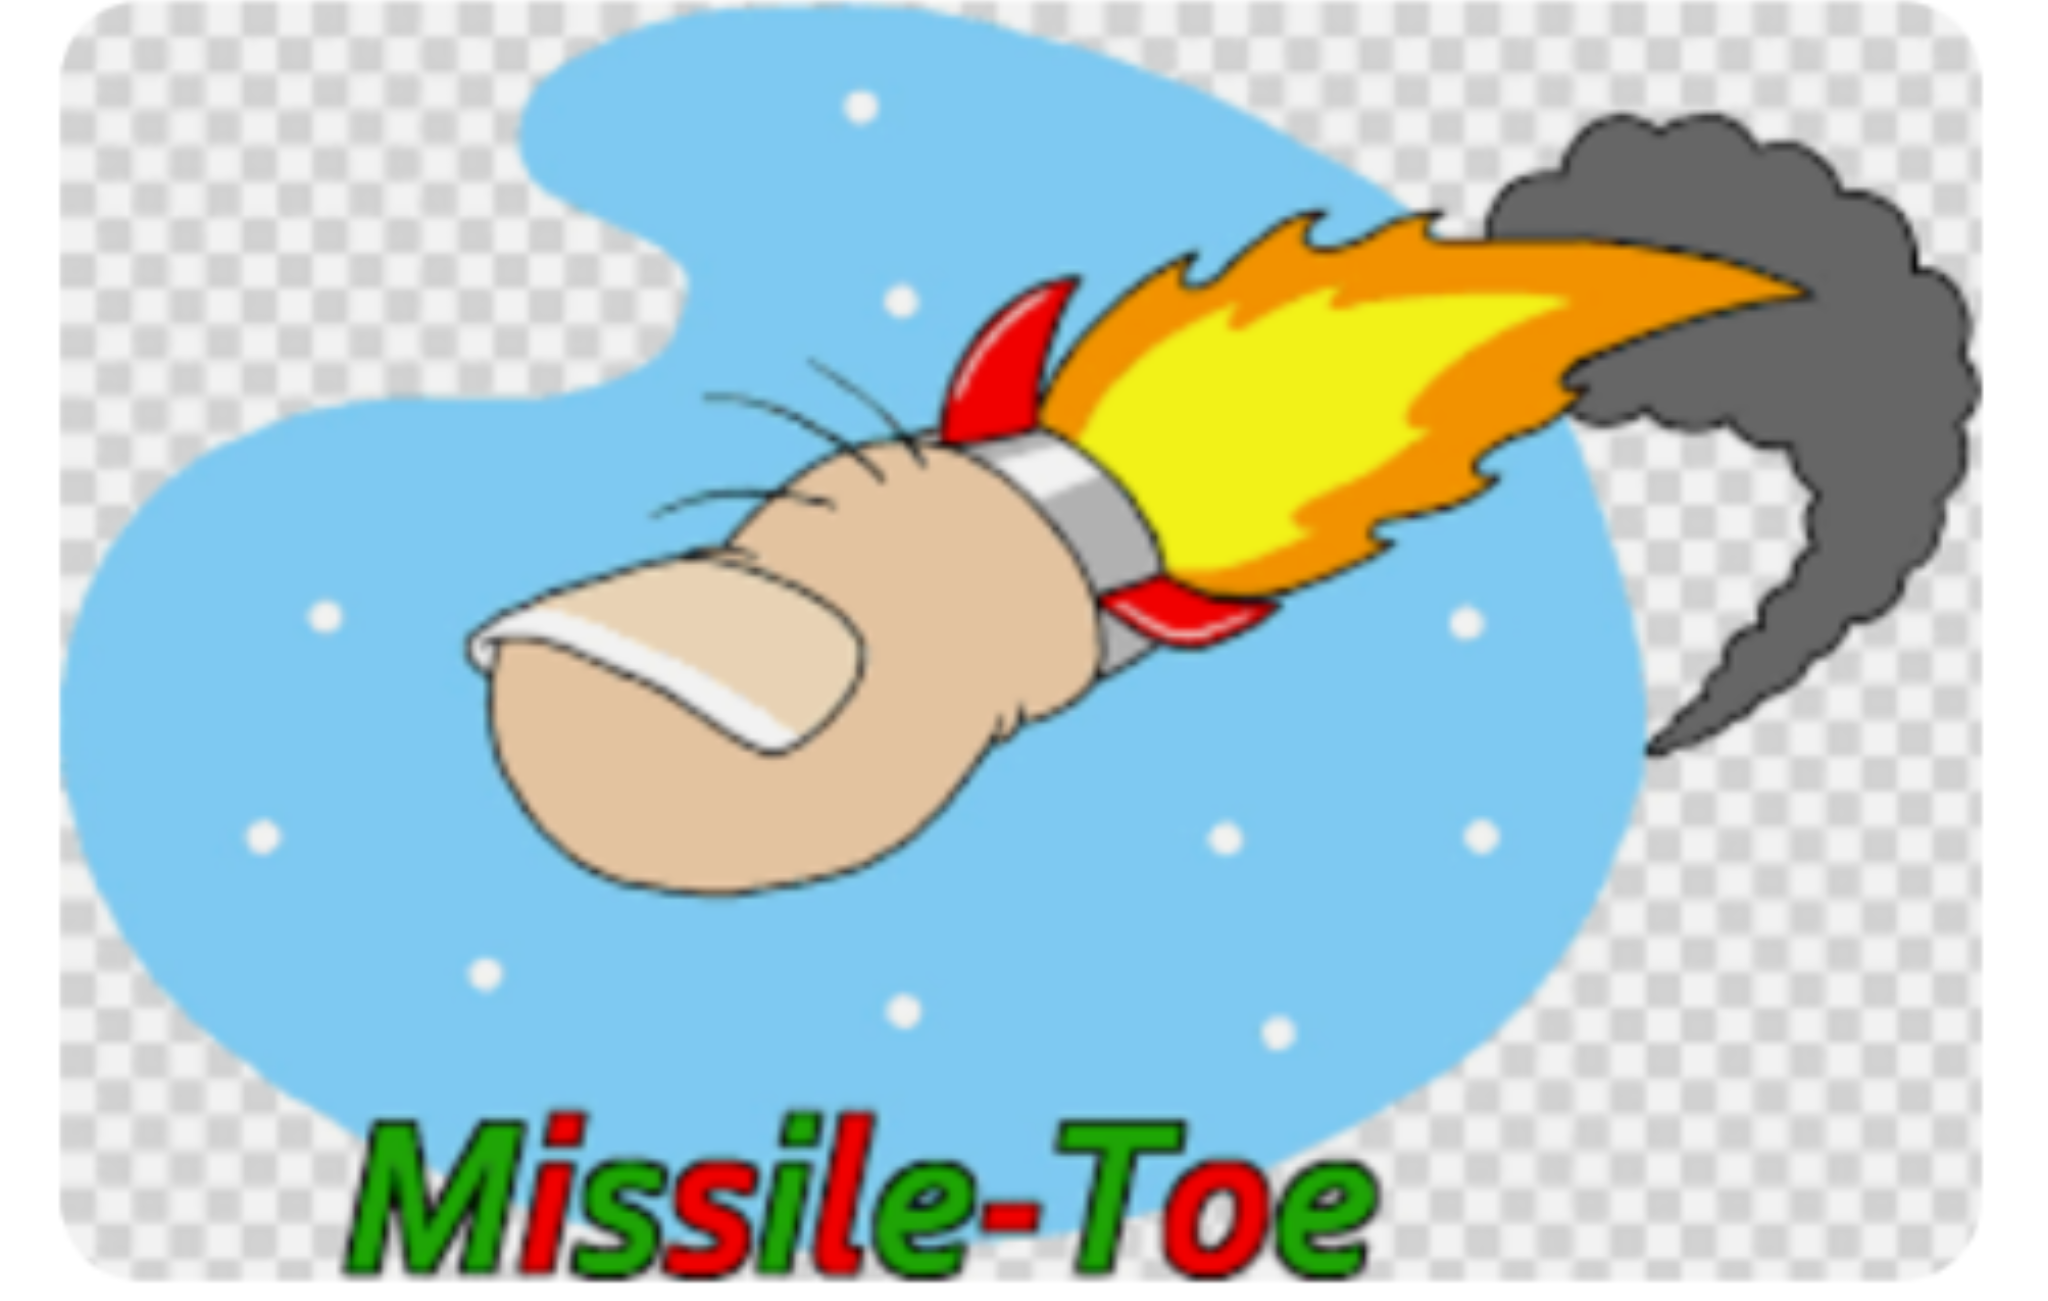 Missile toe Blank Meme Template